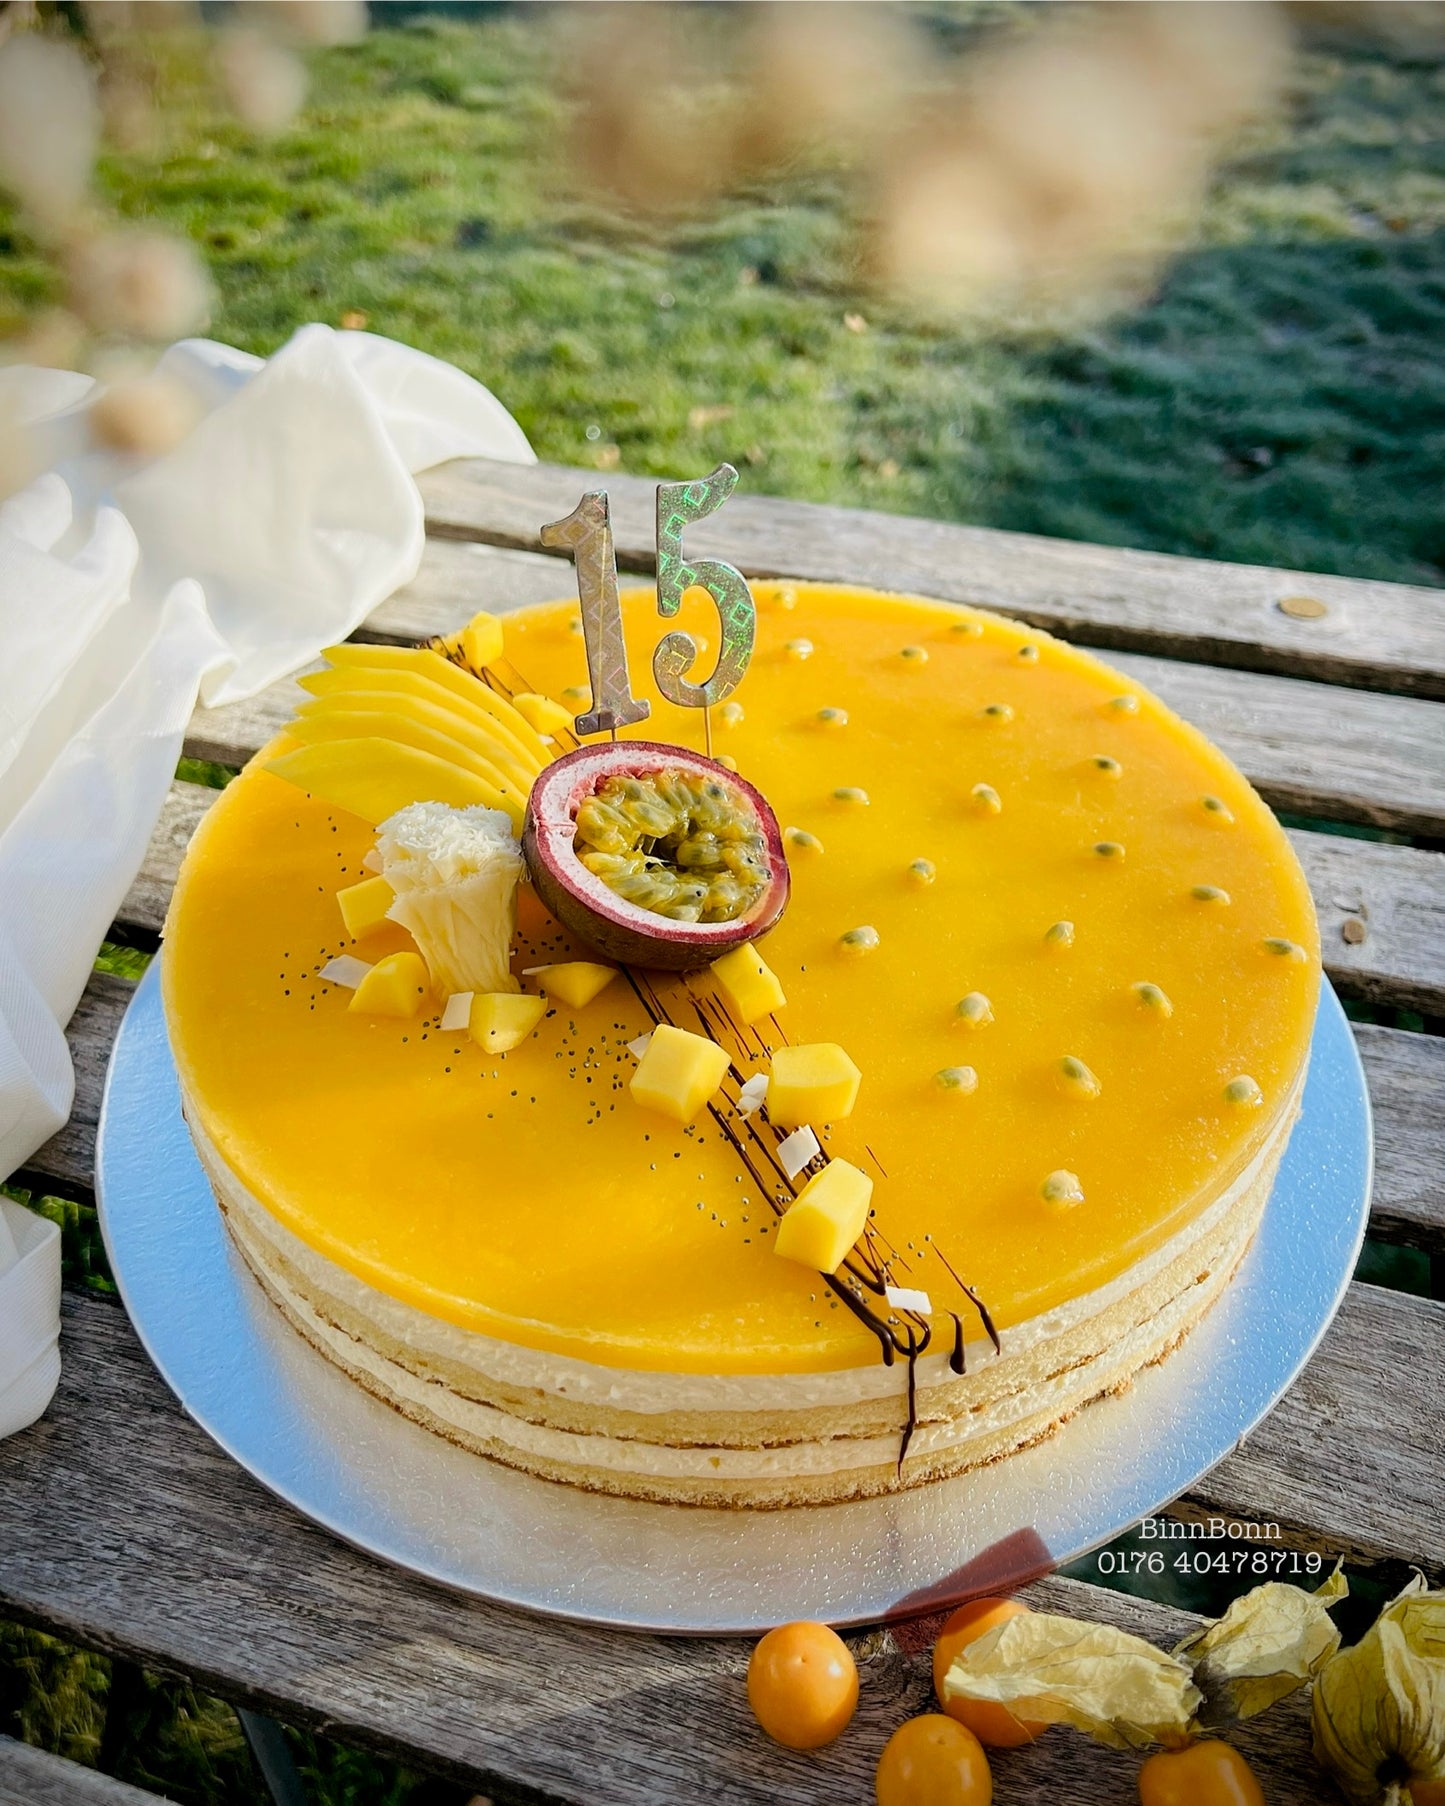 32. Torte "Tropical Love" Mango-Maracuja Cheesecake mit frischem Mangopüree 26 cm